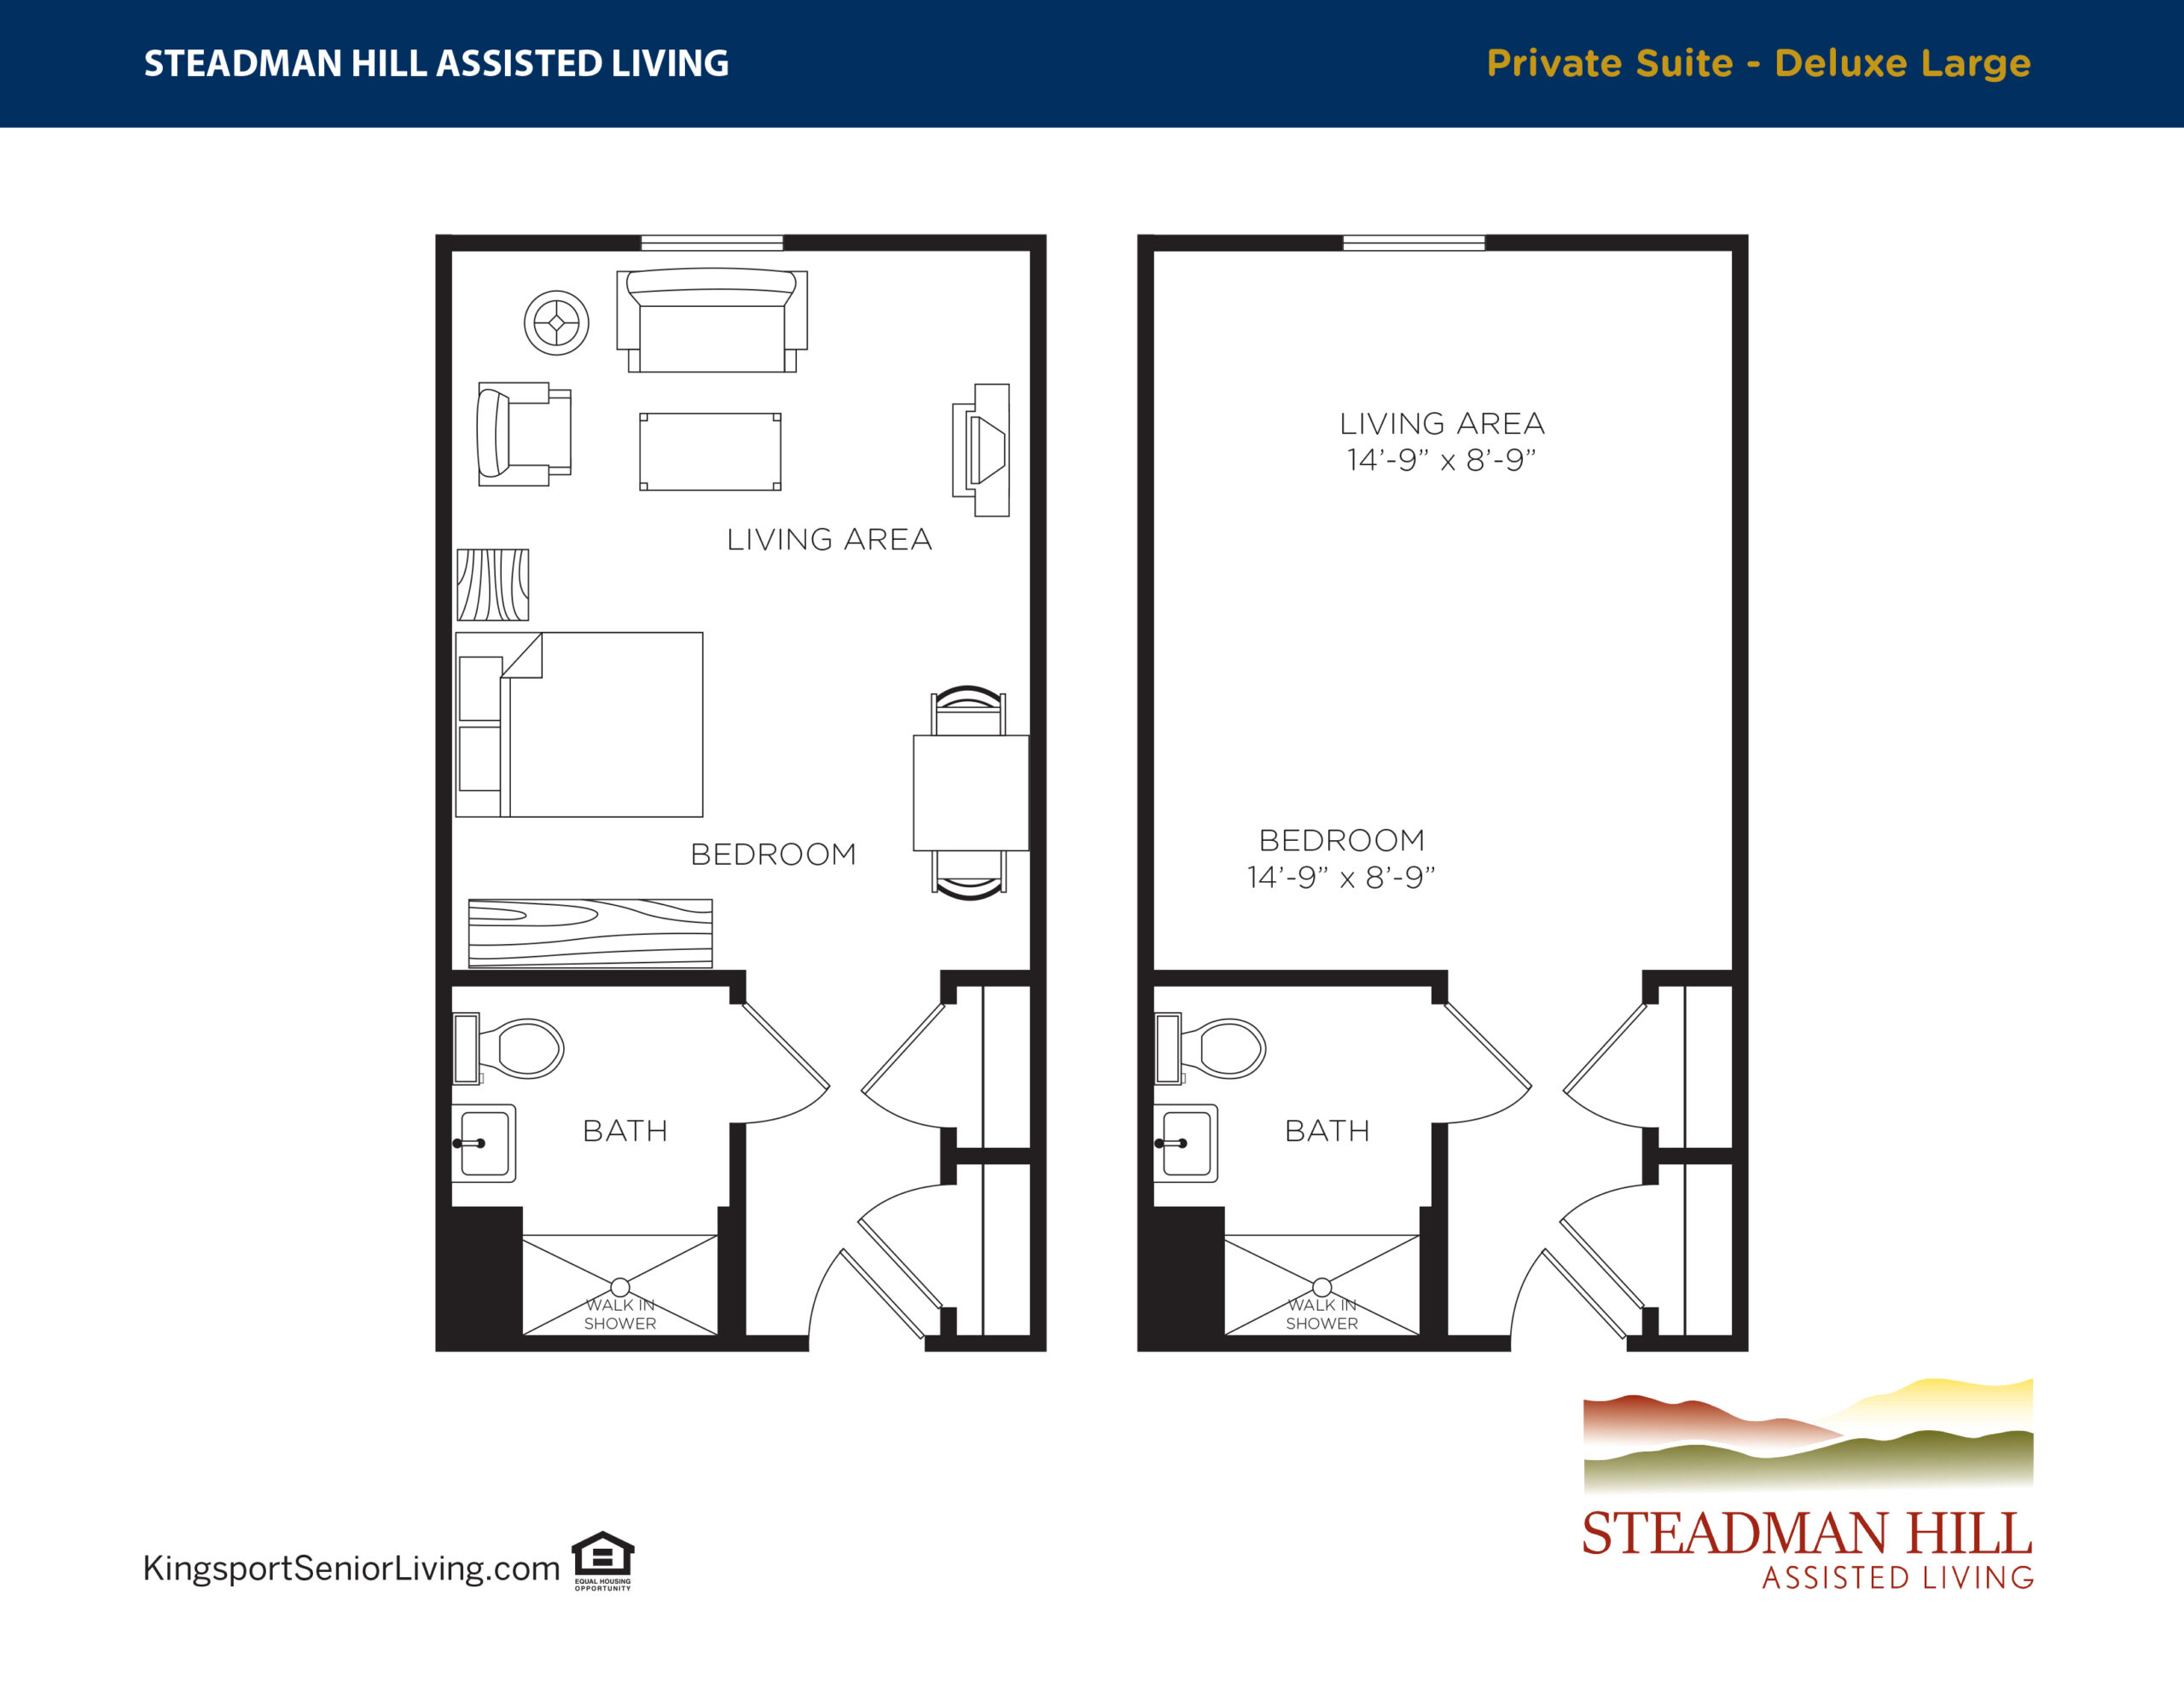 Steadman Hill Floorplan Private Deluxe Large